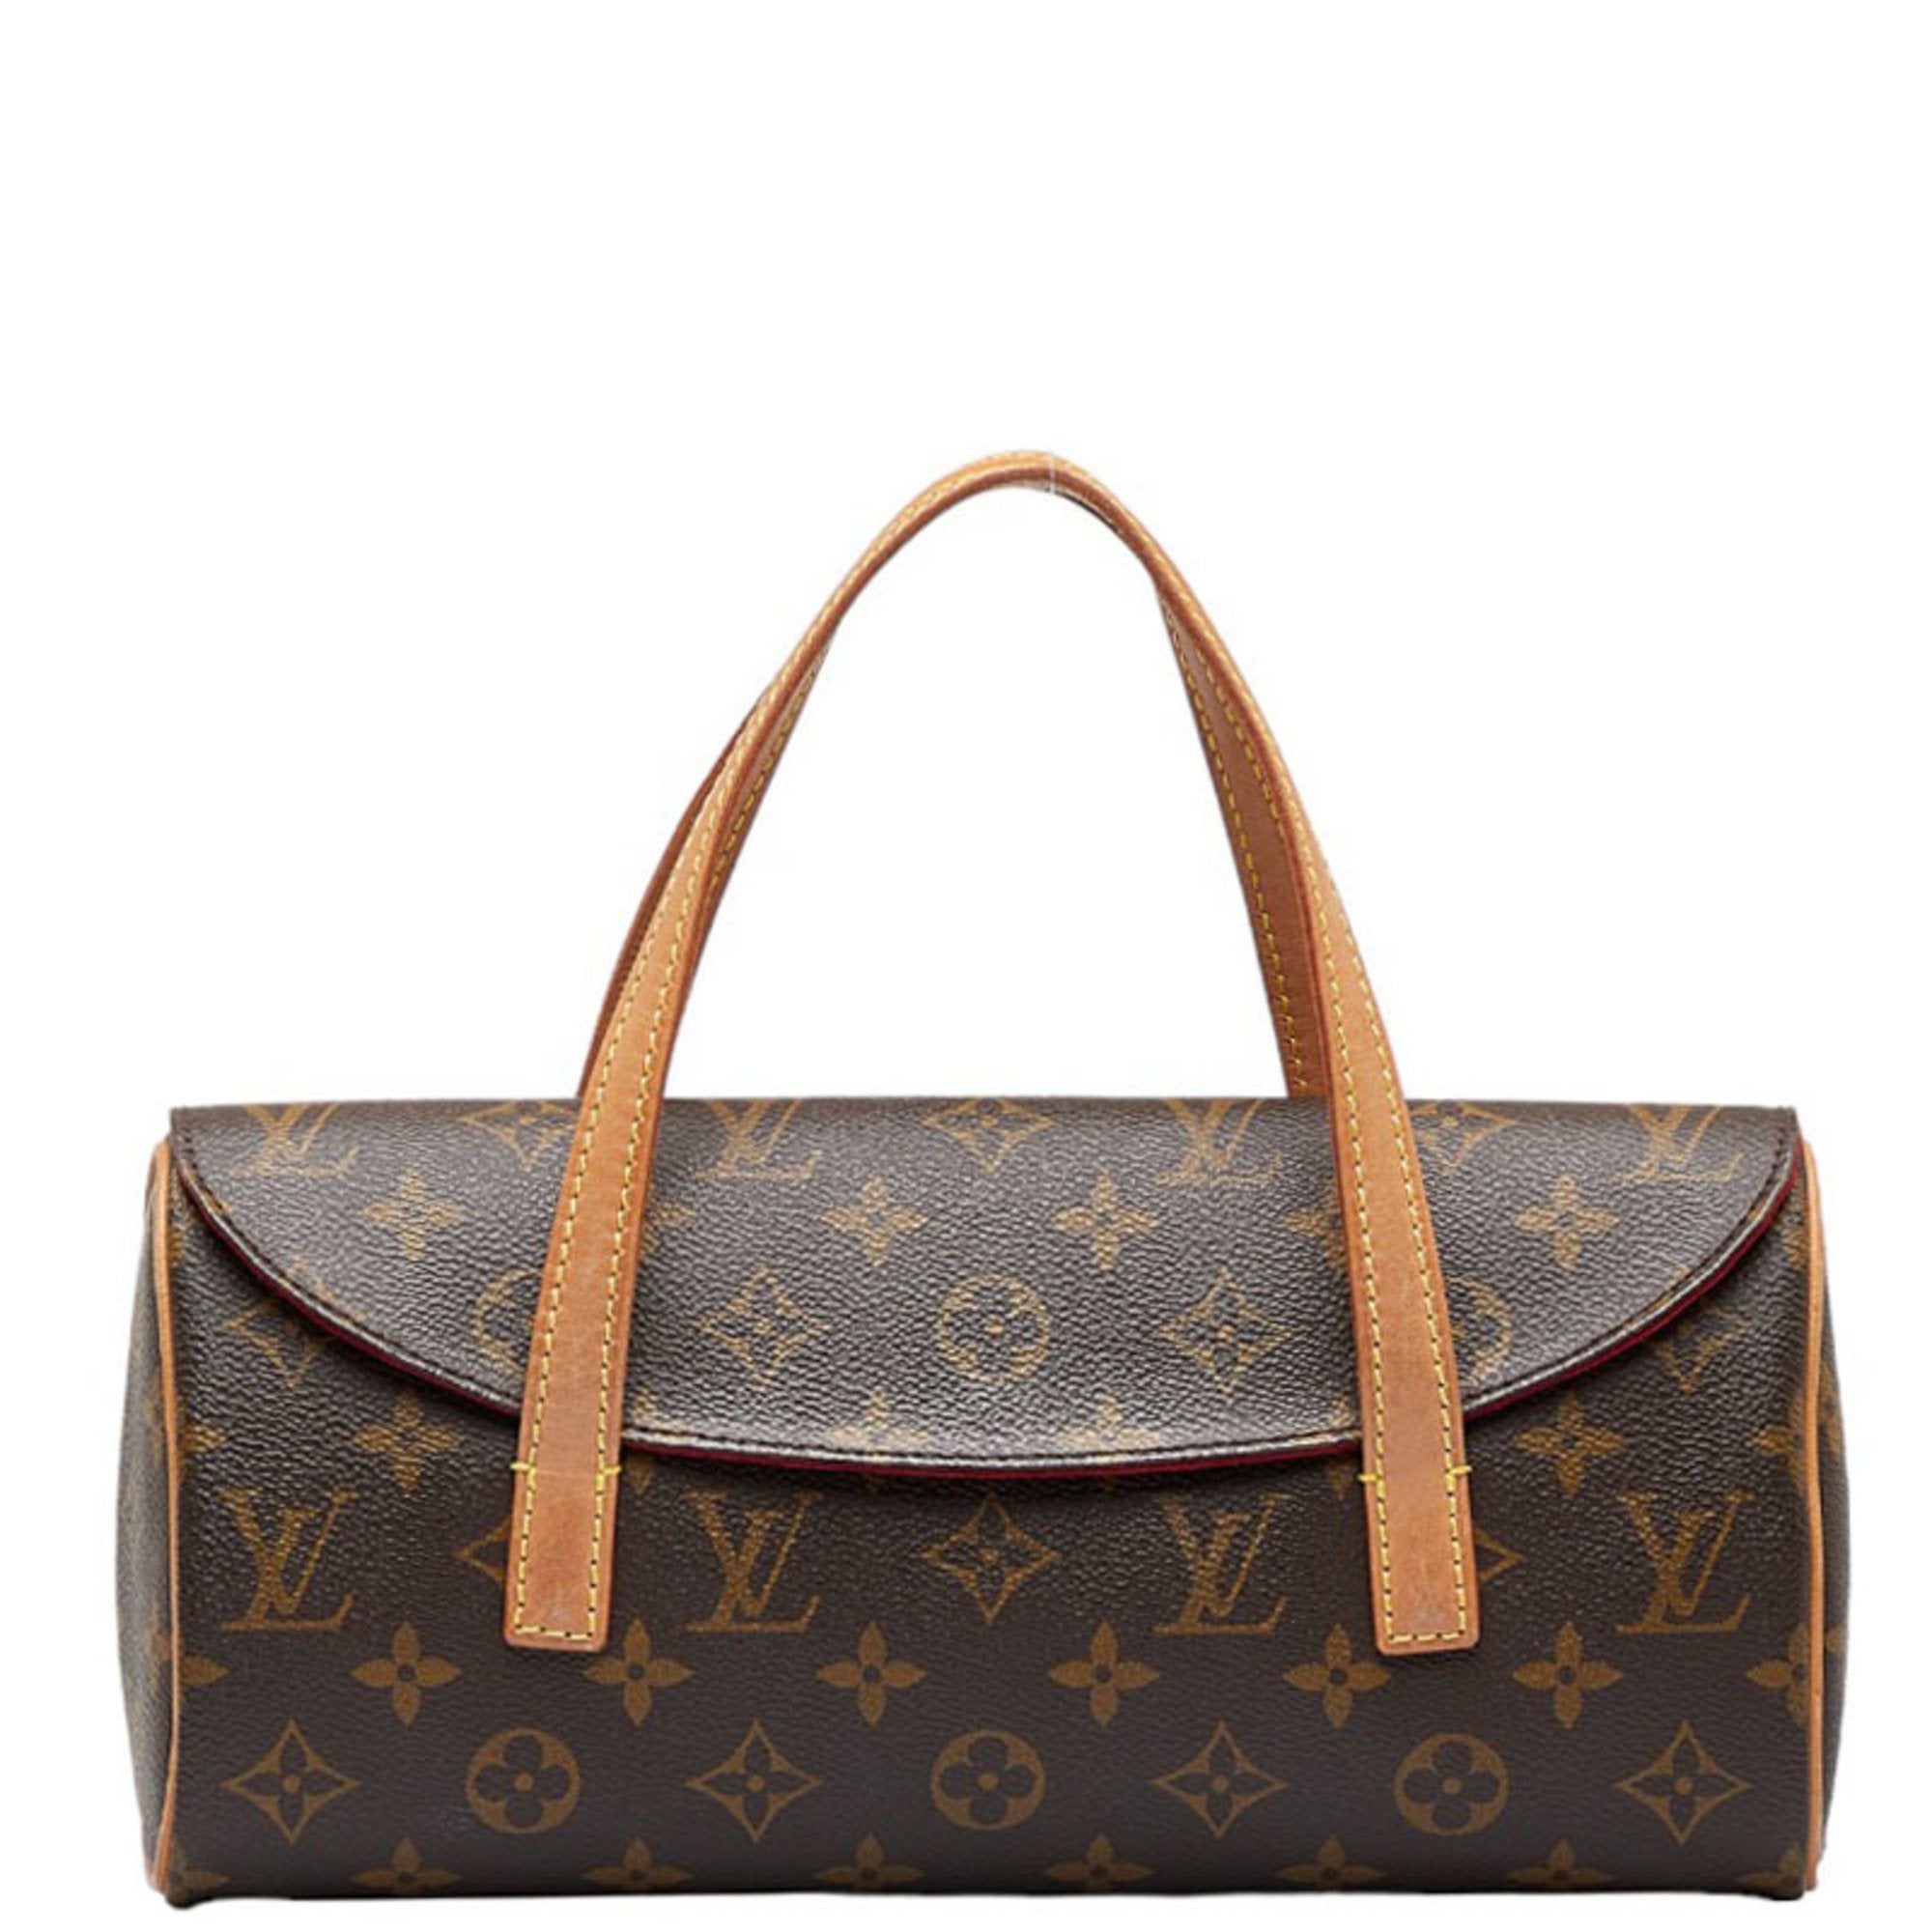 Louis Vuitton Sonatine Monogram Canvas Handbag on SALE